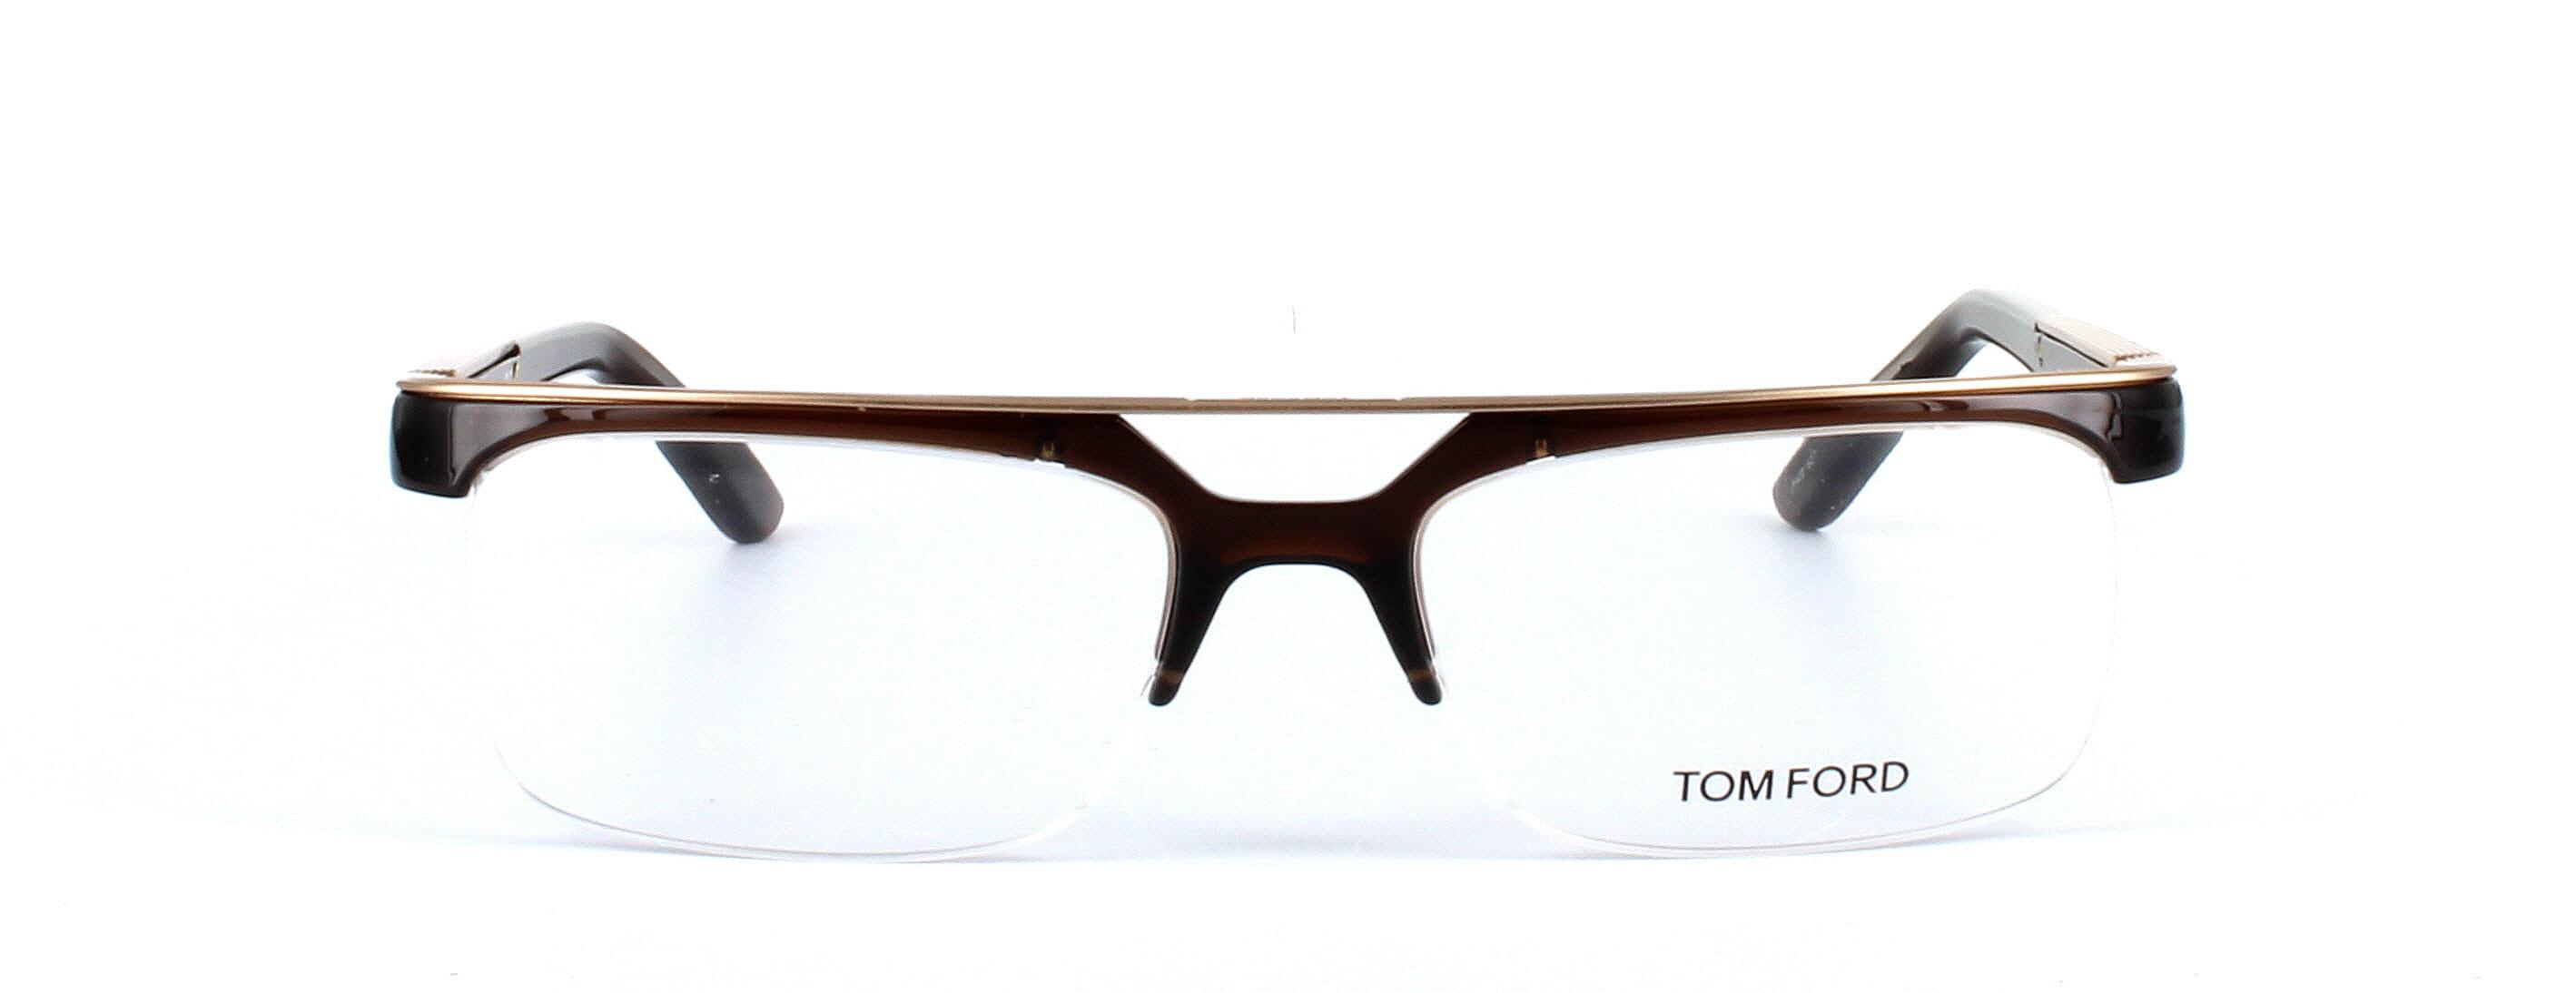 Tom Ford - 5069 - Unisex semi-rimless glasses - image 5